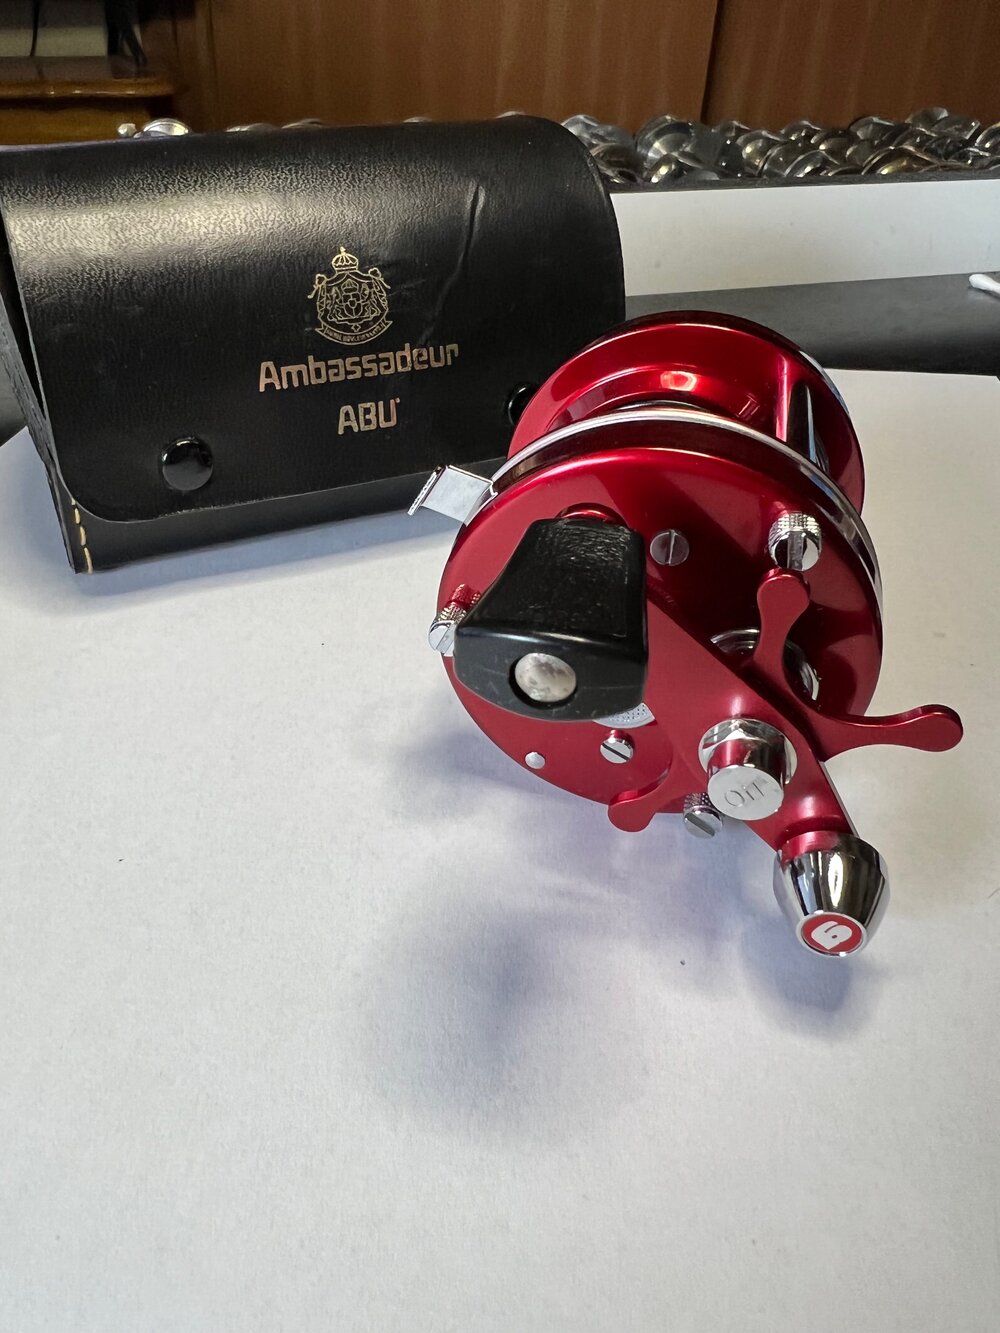 ABU AMBASSADEUR 5000 MINT with Case, accessories, & Manuals — VINTAGE  FISHING REELS